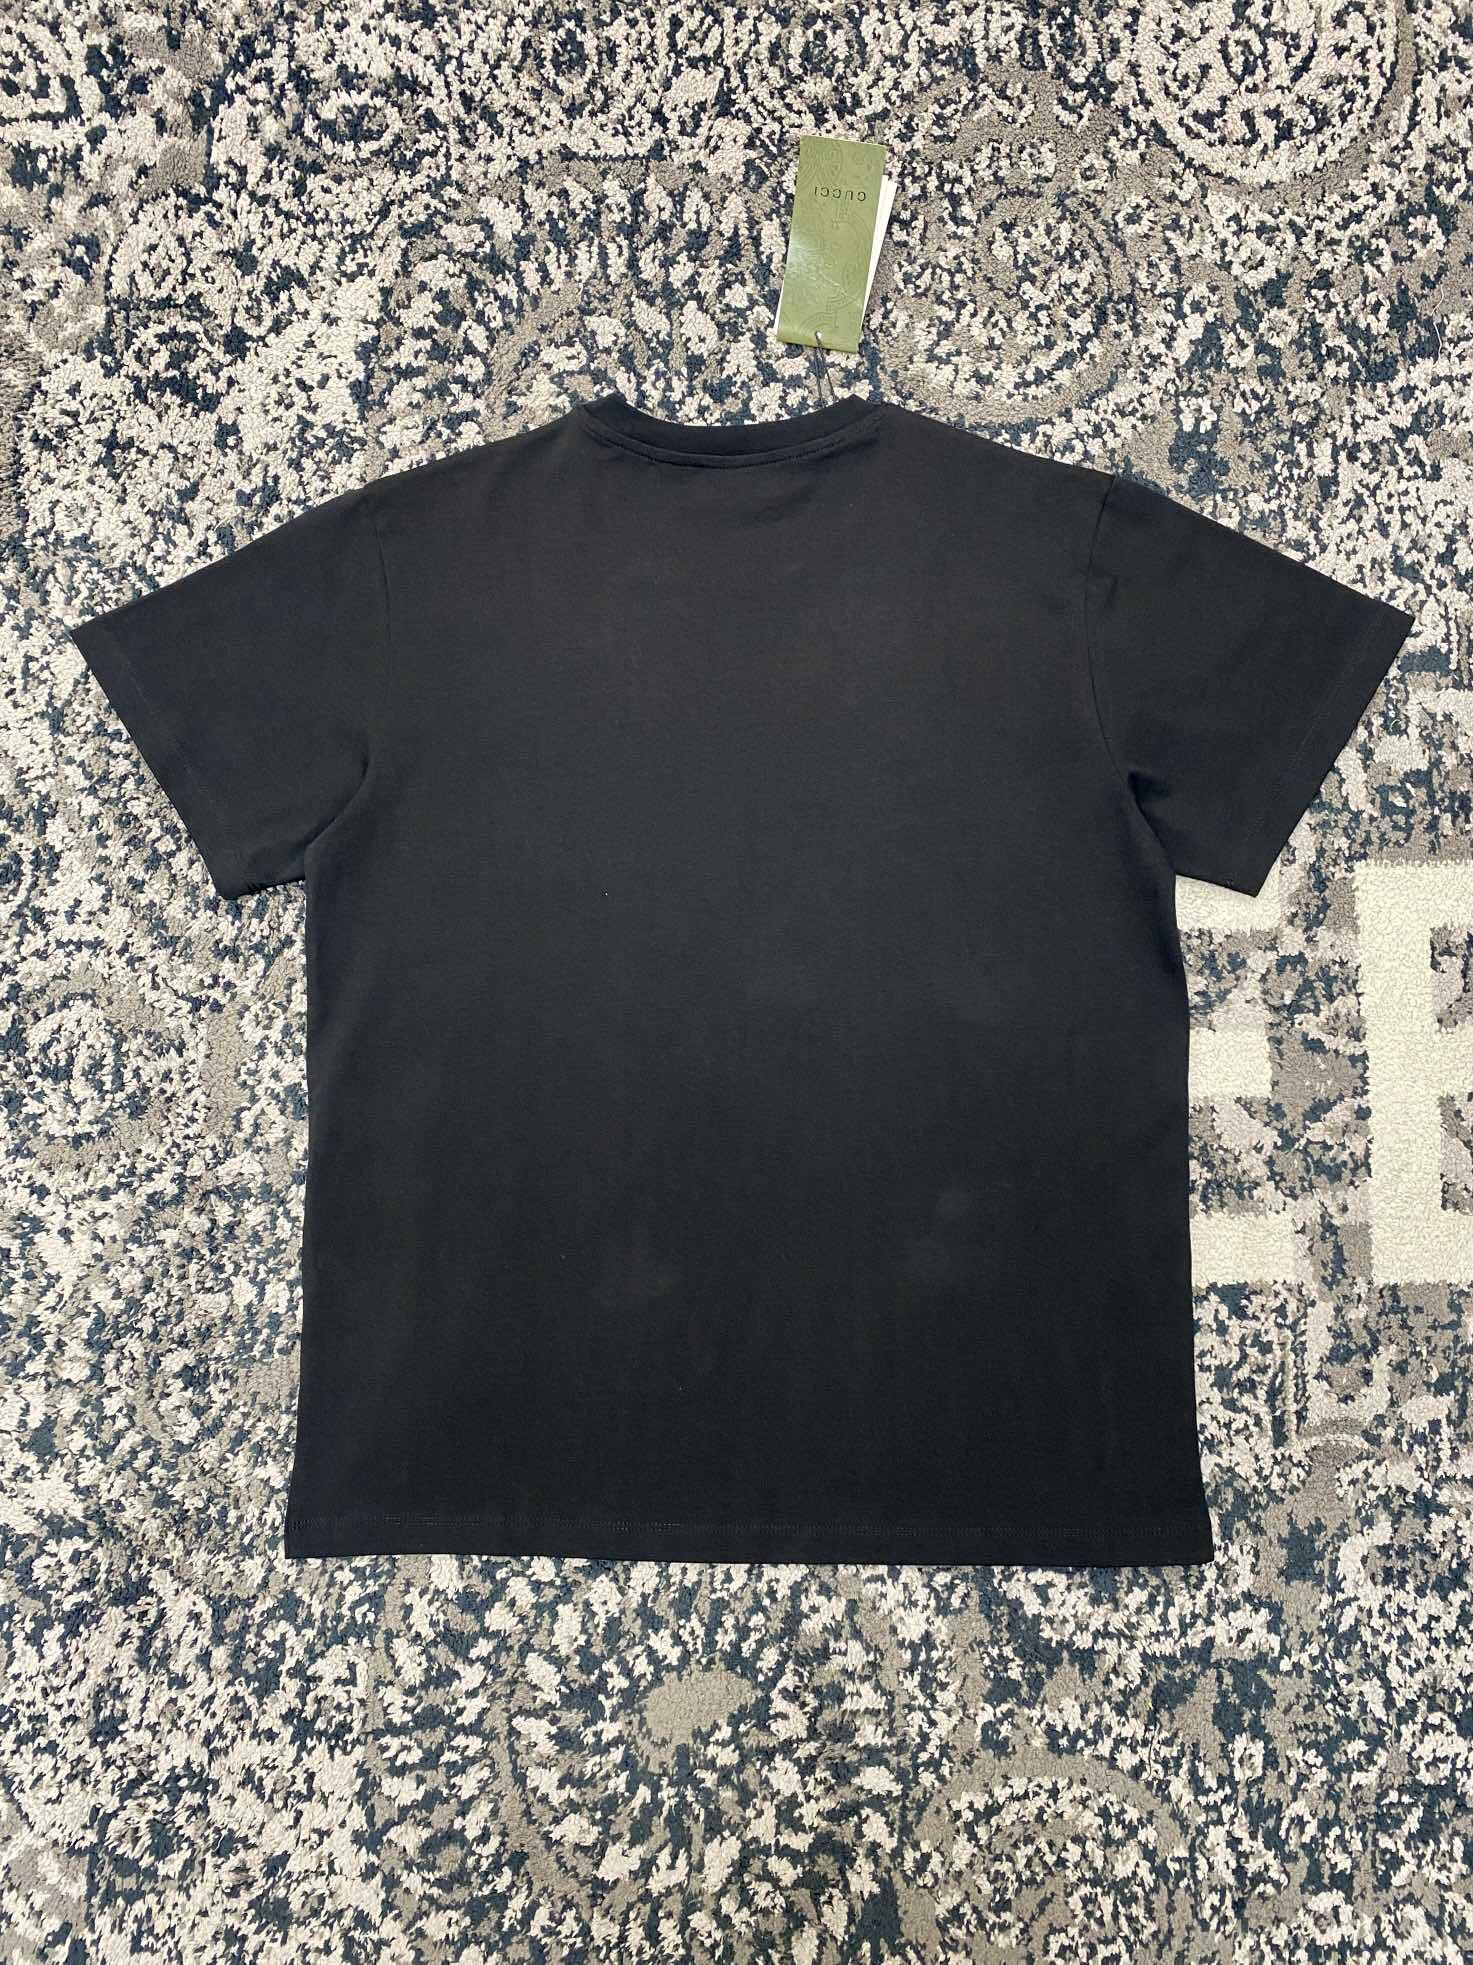 round-gg-print-cotton-t-shirt-6742_16845015015-1000